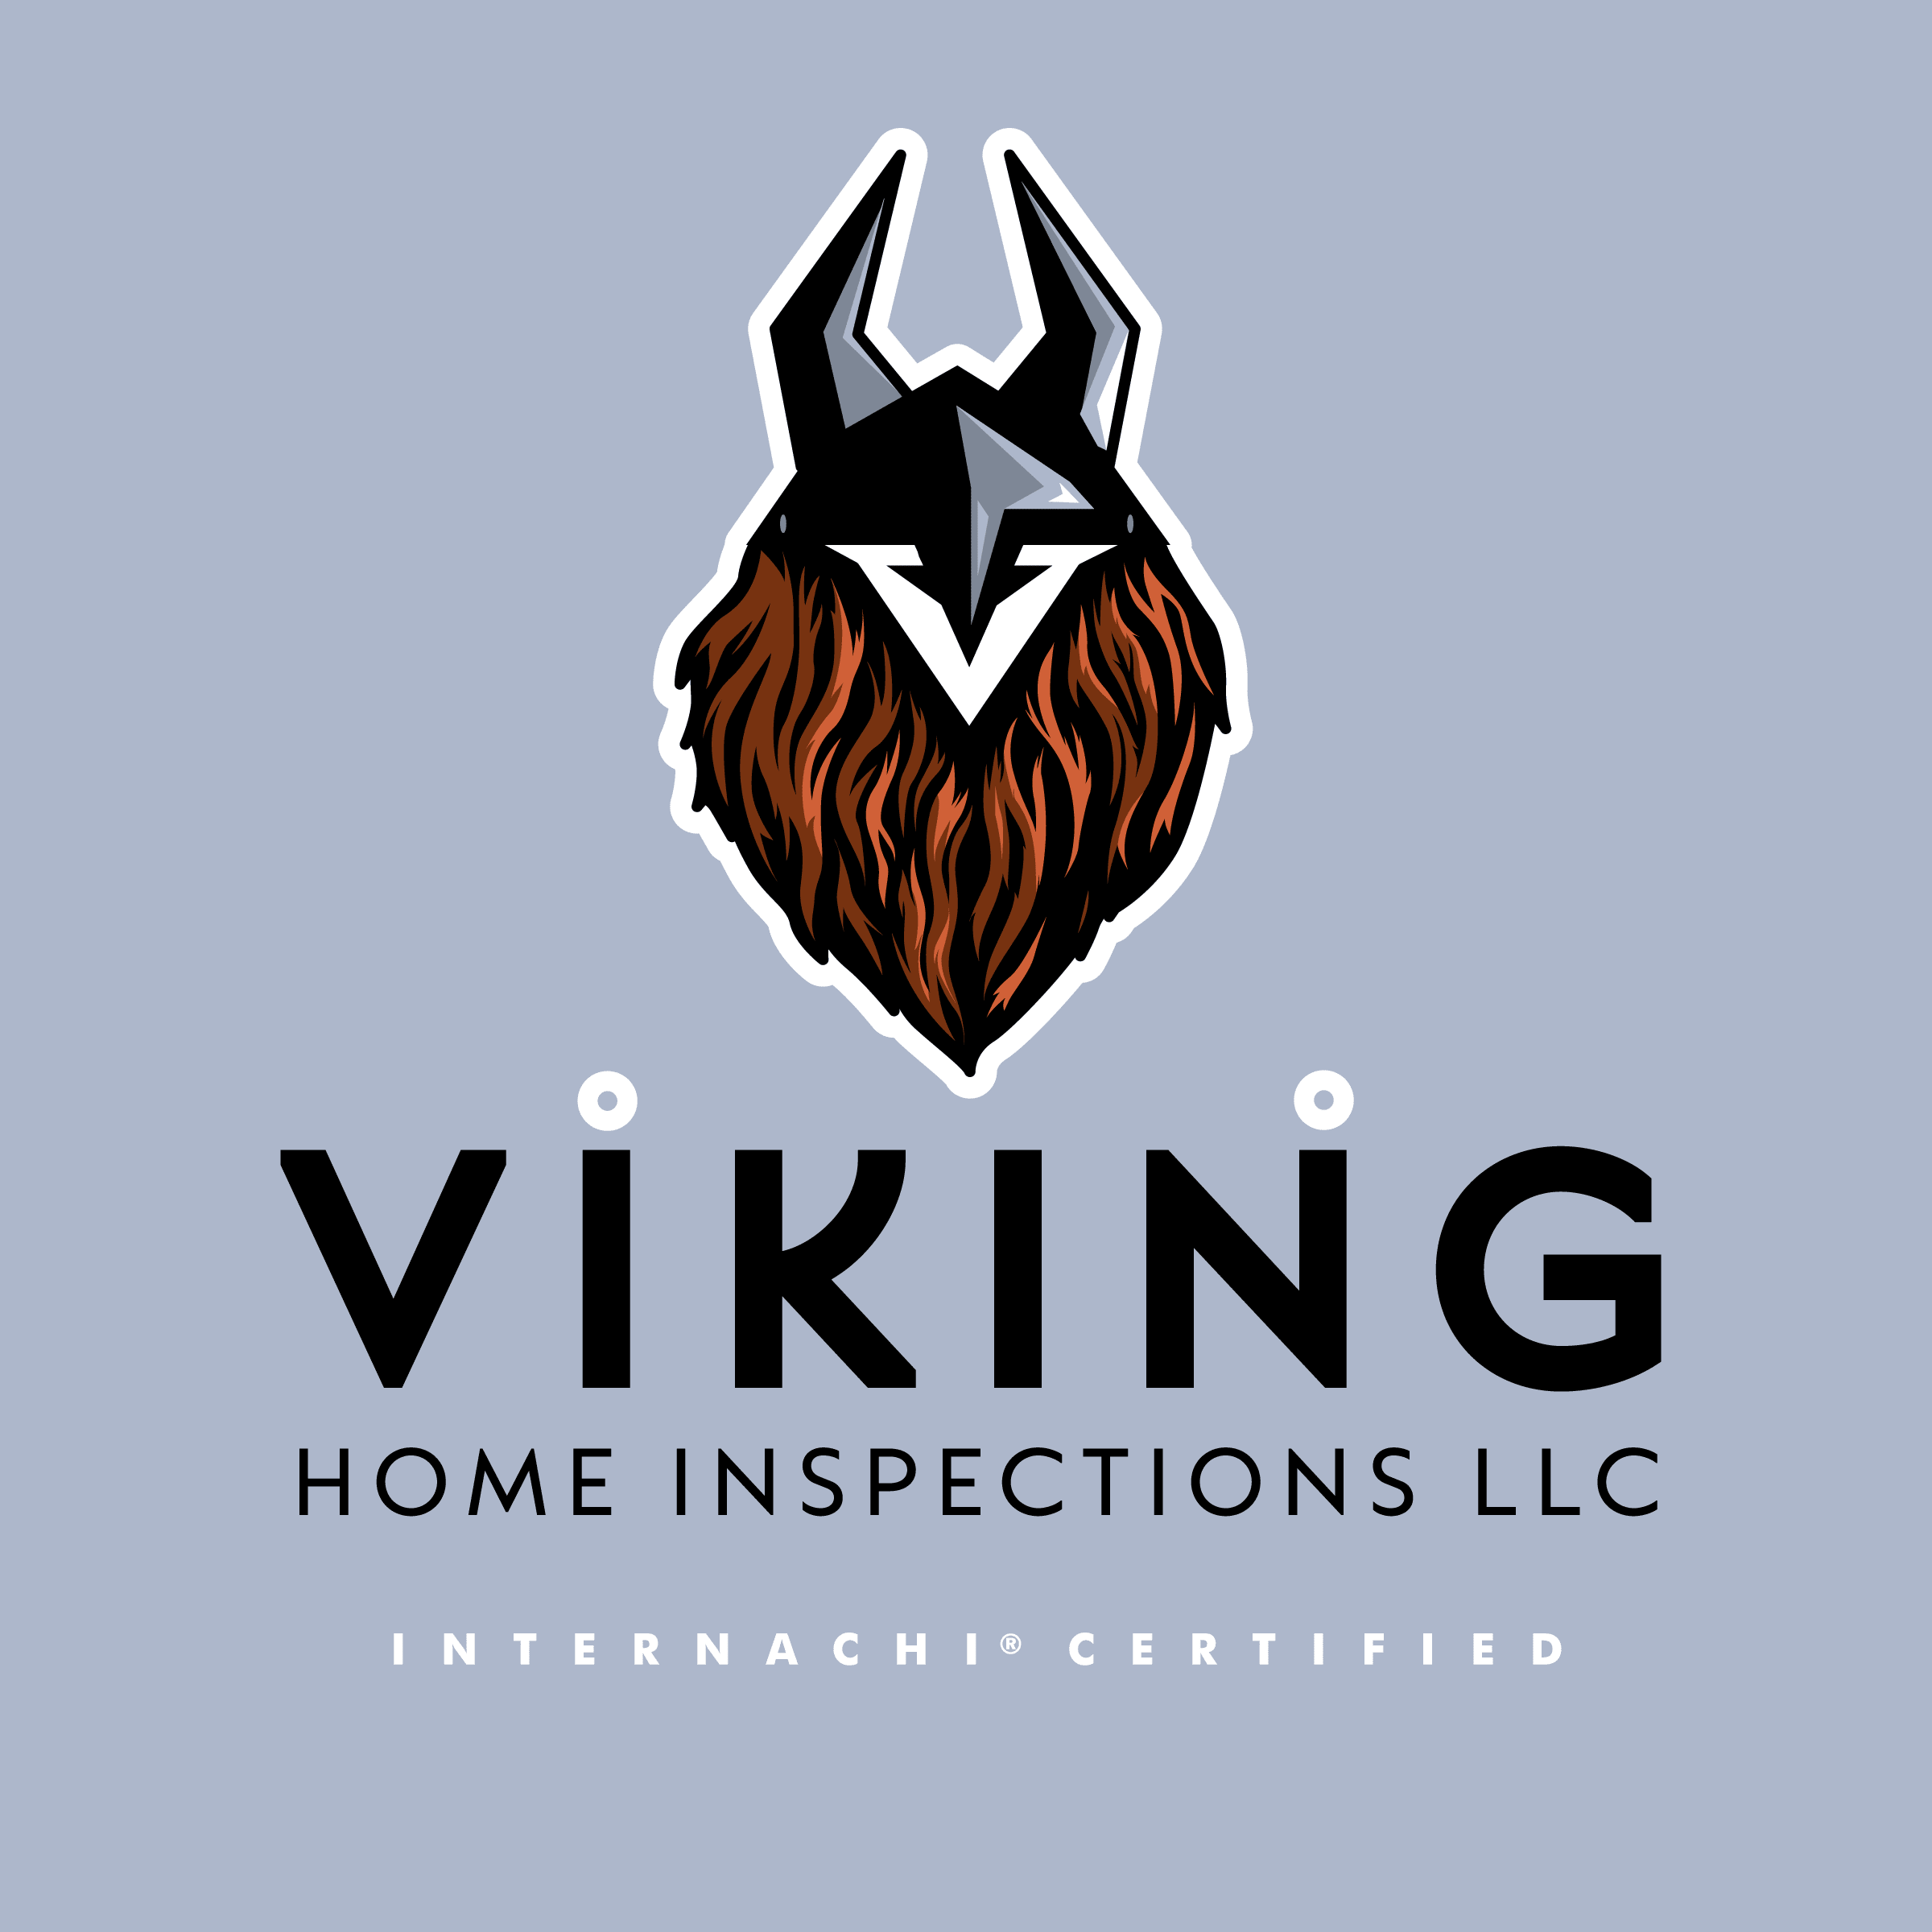 Viking Home Inspections LLC Logo